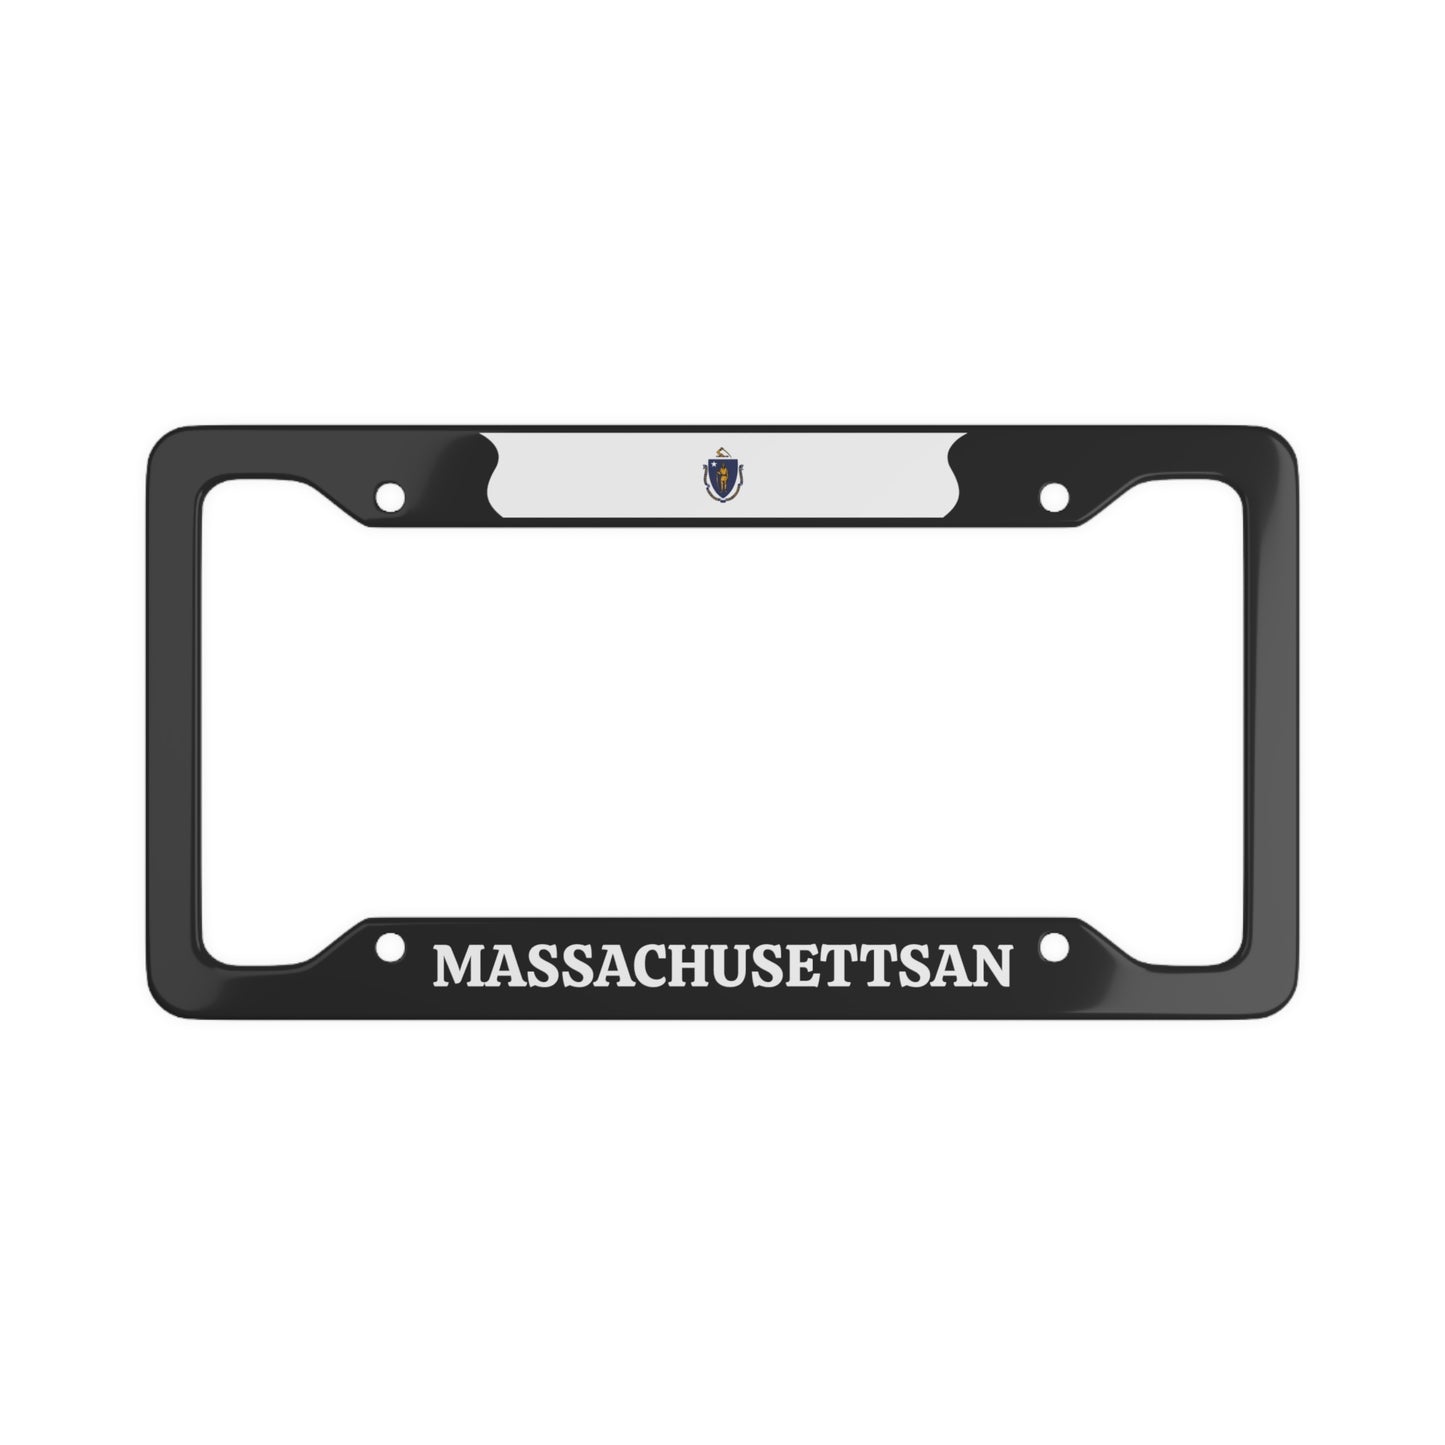 Massachusettsan, Massachusetts State, USA License Plate Frame